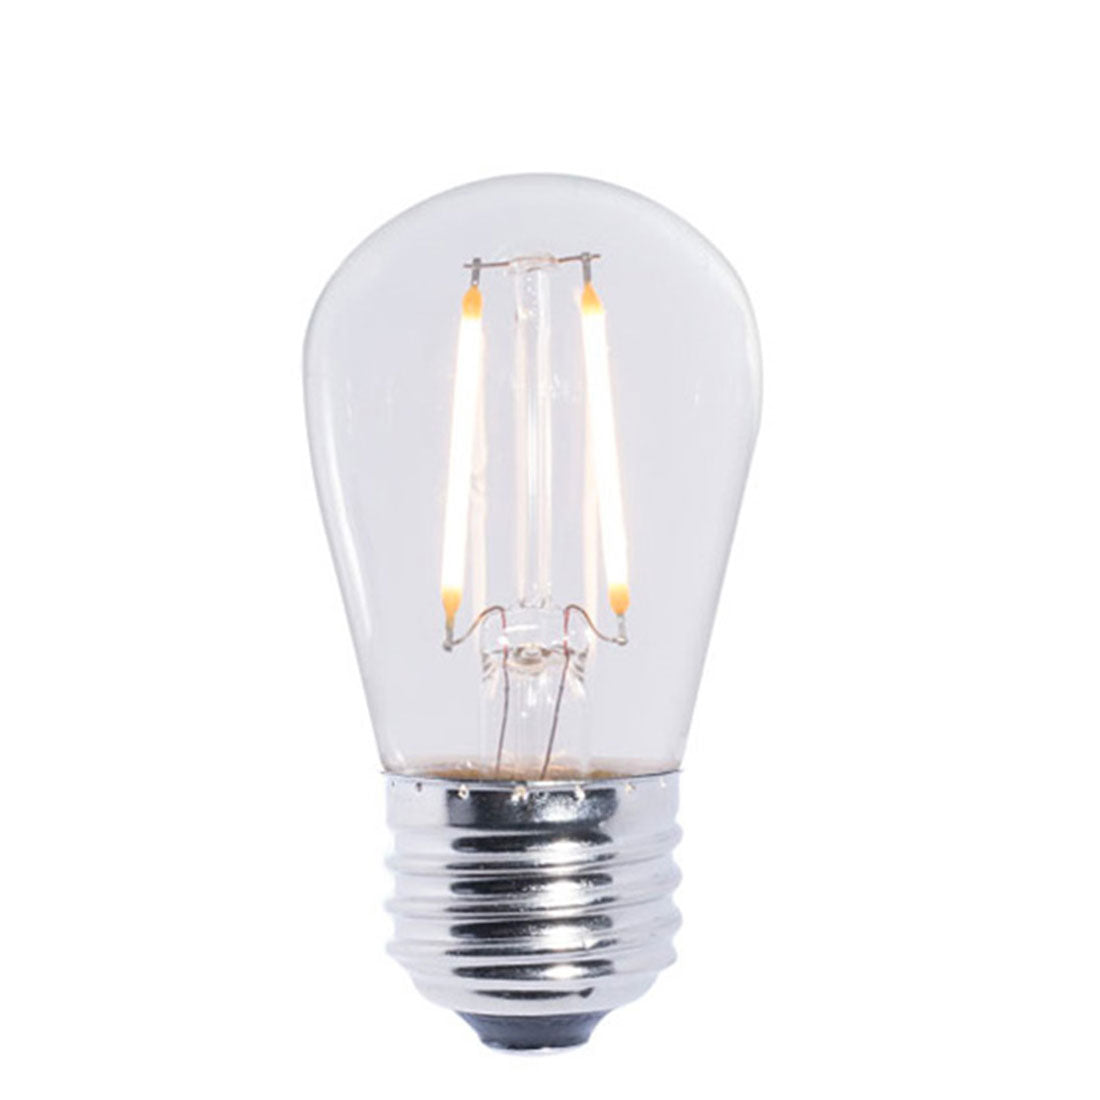 776851 - Filaments Dimmable S14 LED Light Bulb - 2.5 Watt - 2700K - 4 Pack